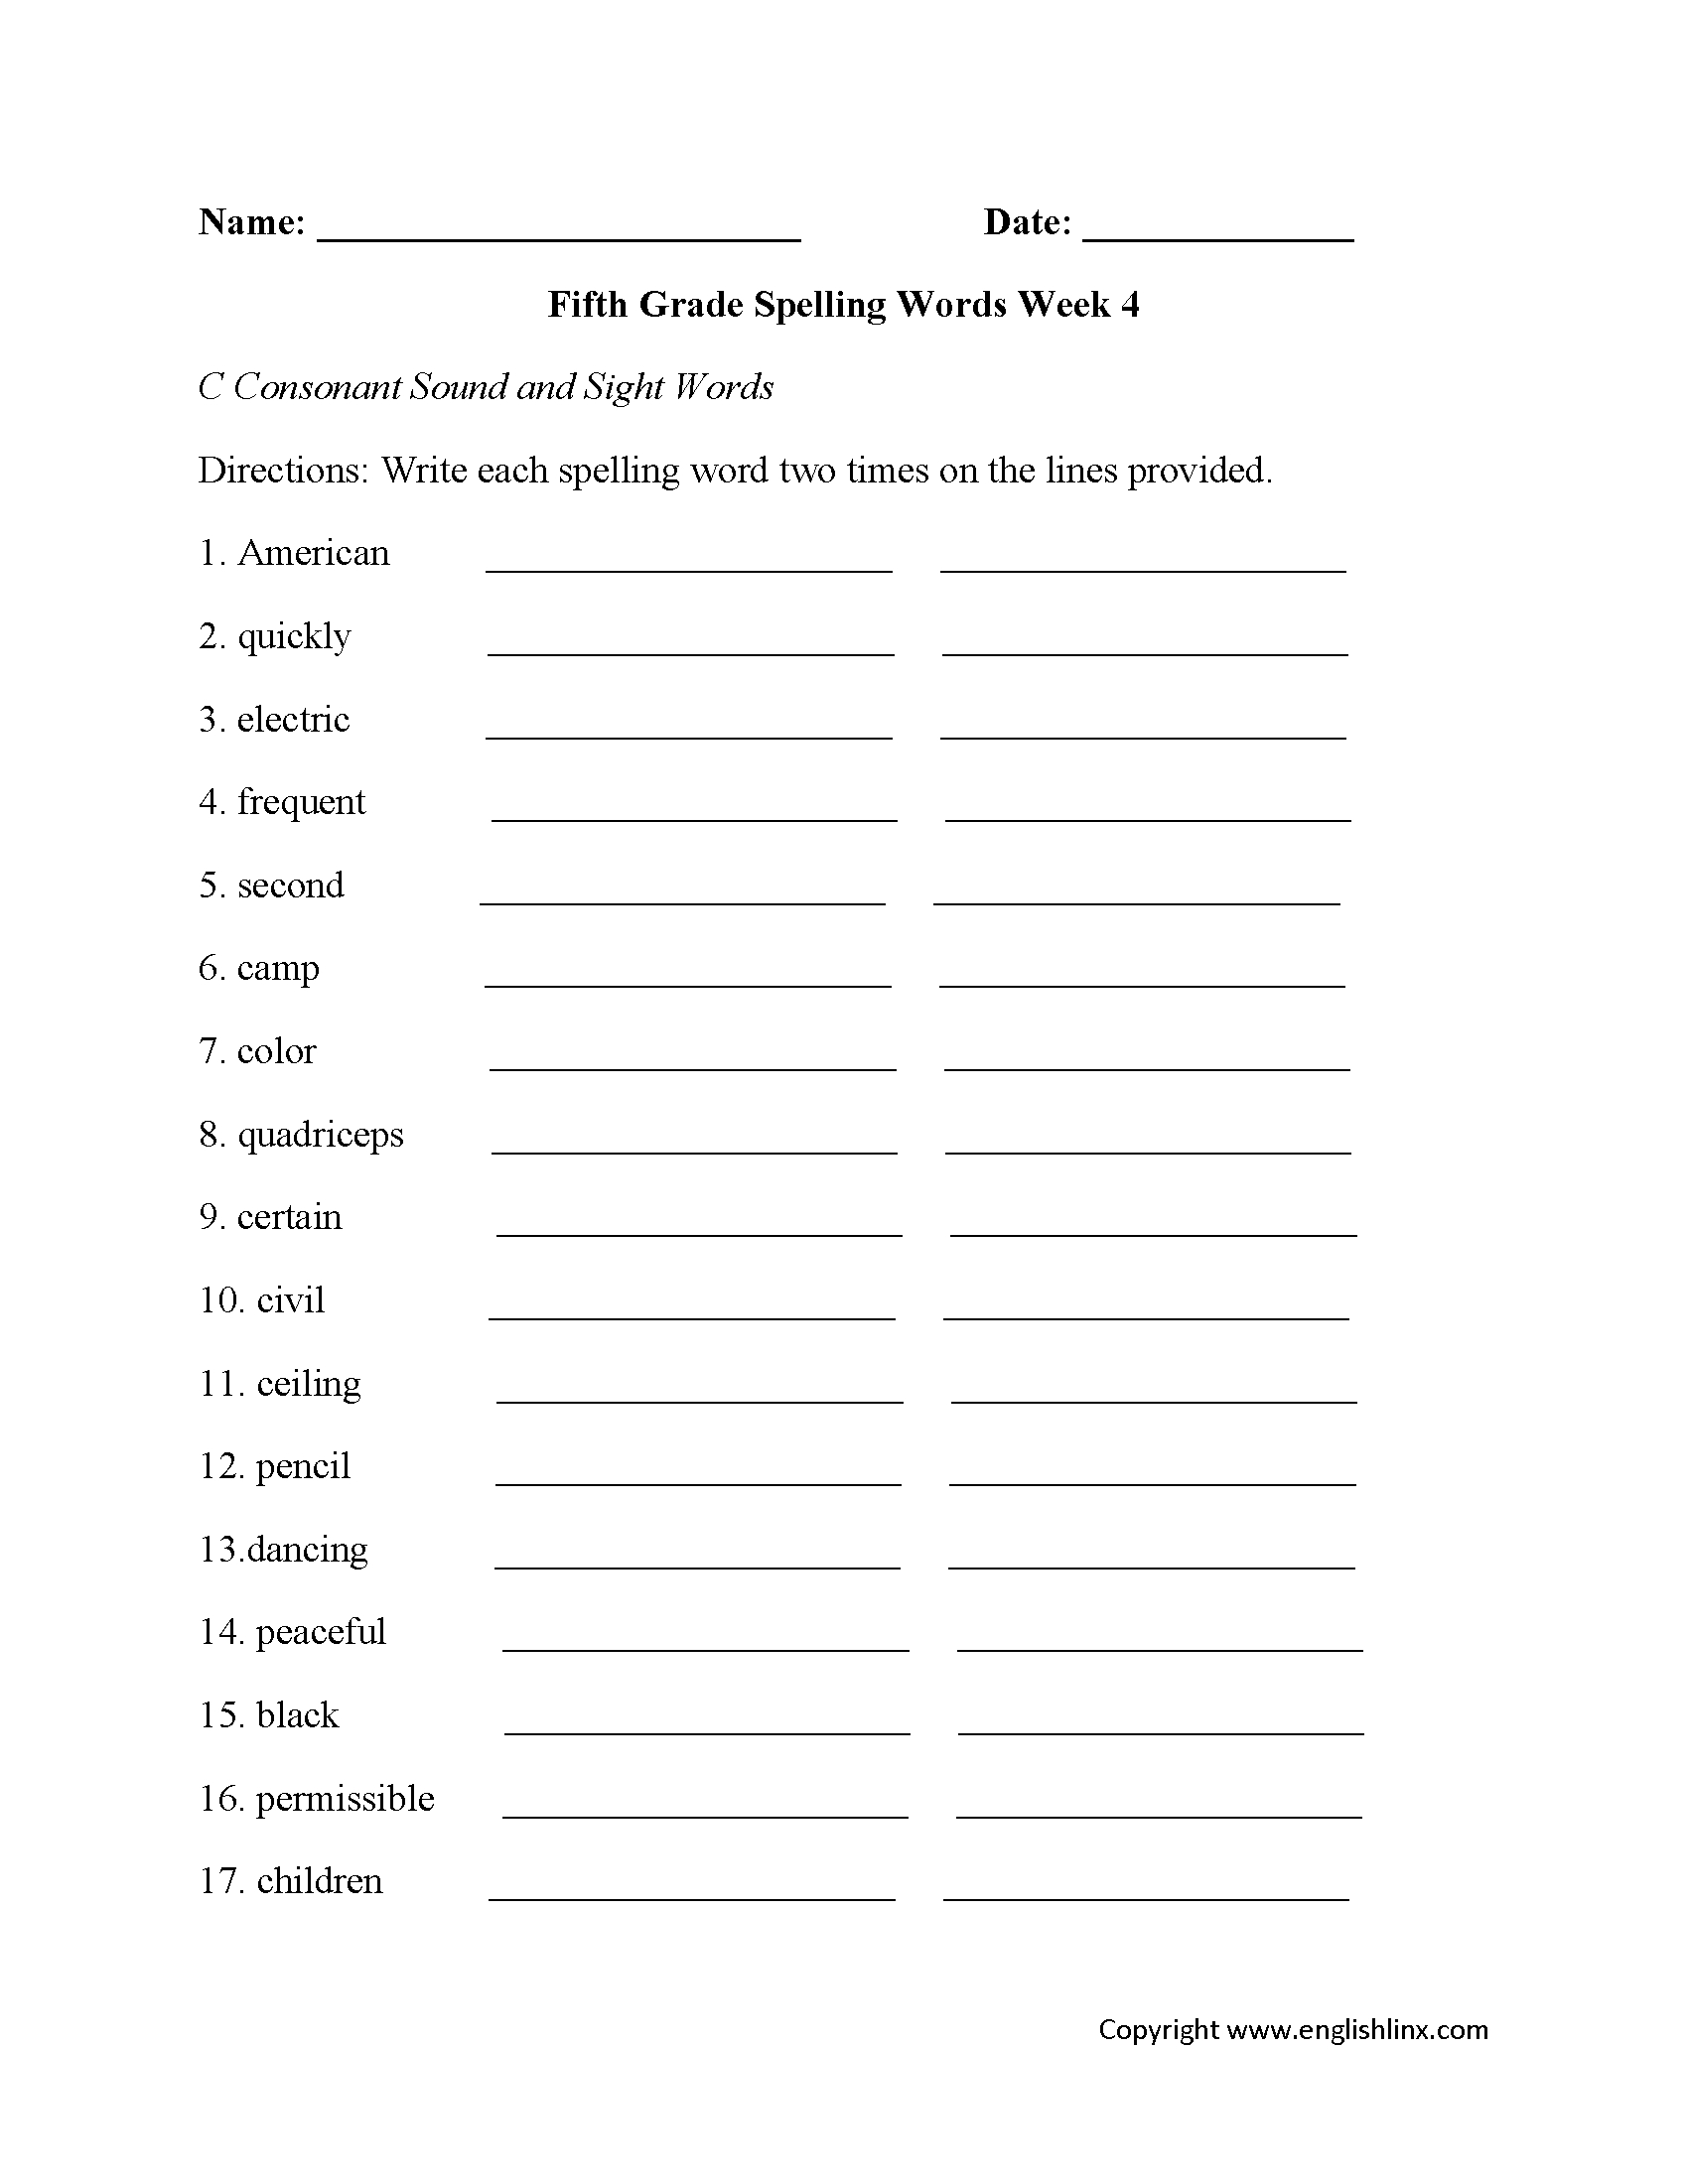 Spelling Worksheets  Fifth Grade Spelling Worksheets Also Spelling Worksheets For Grade 1